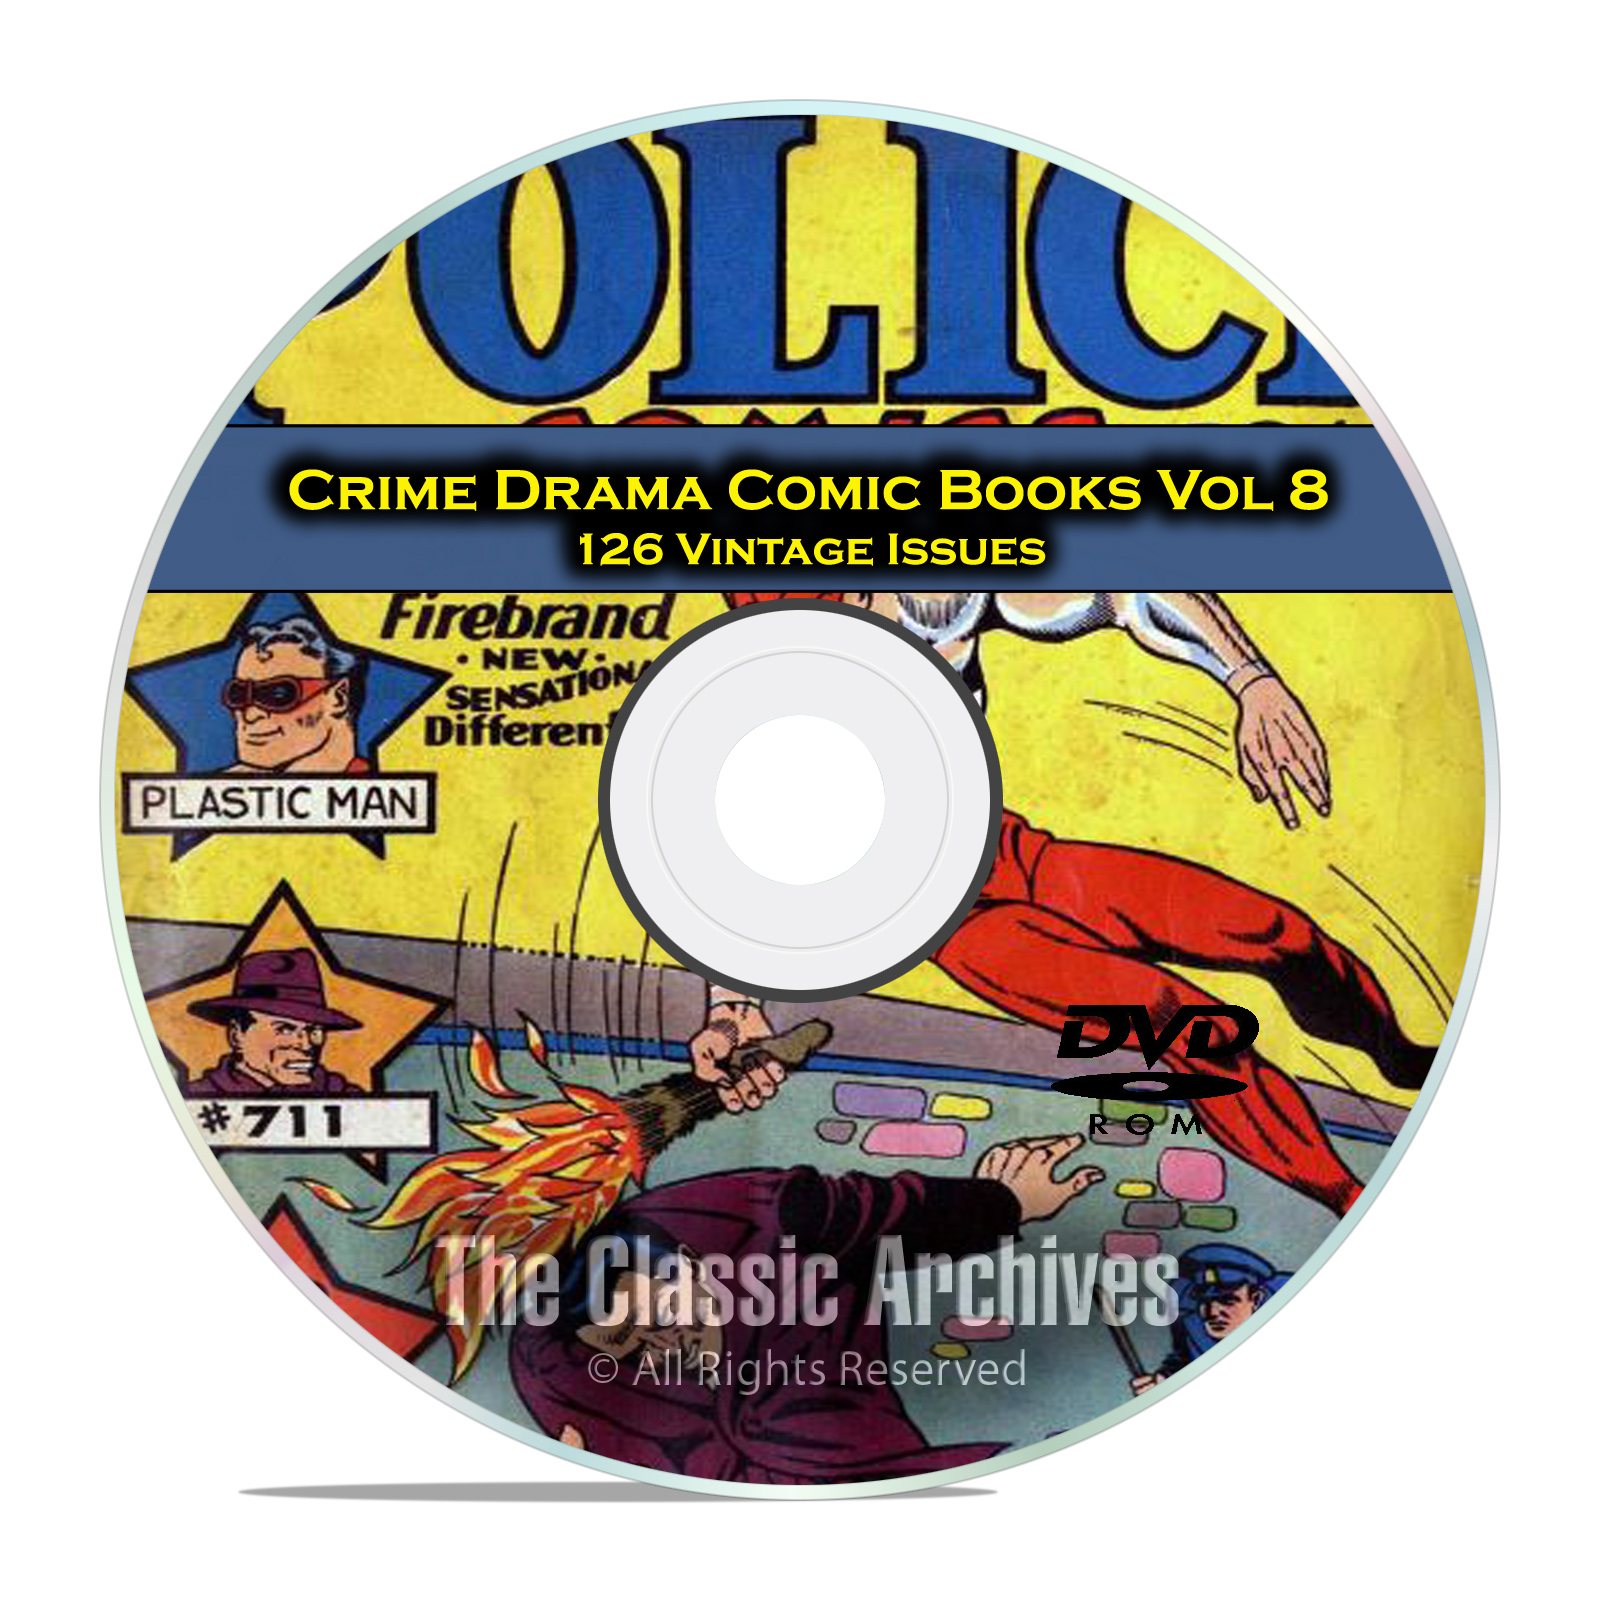 Crime Drama, Suspense, Vol 8, Police Comics 126 Issues Golden Age Comic DVD - Click Image to Close